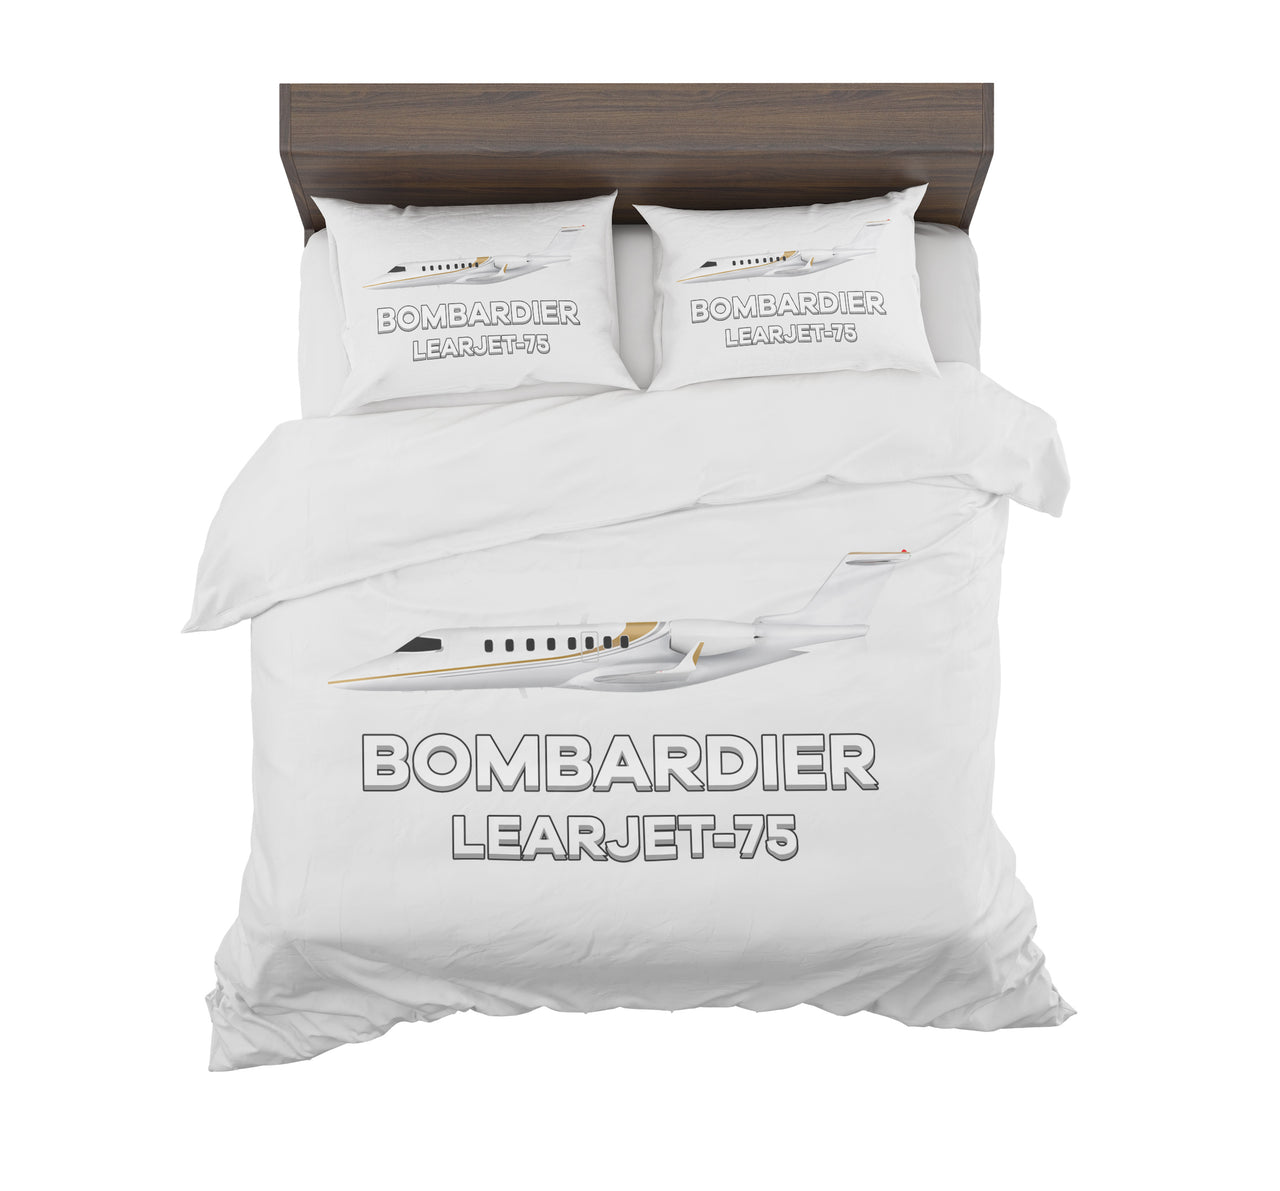 The Bombardier Learjet 75 Designed Bedding Sets